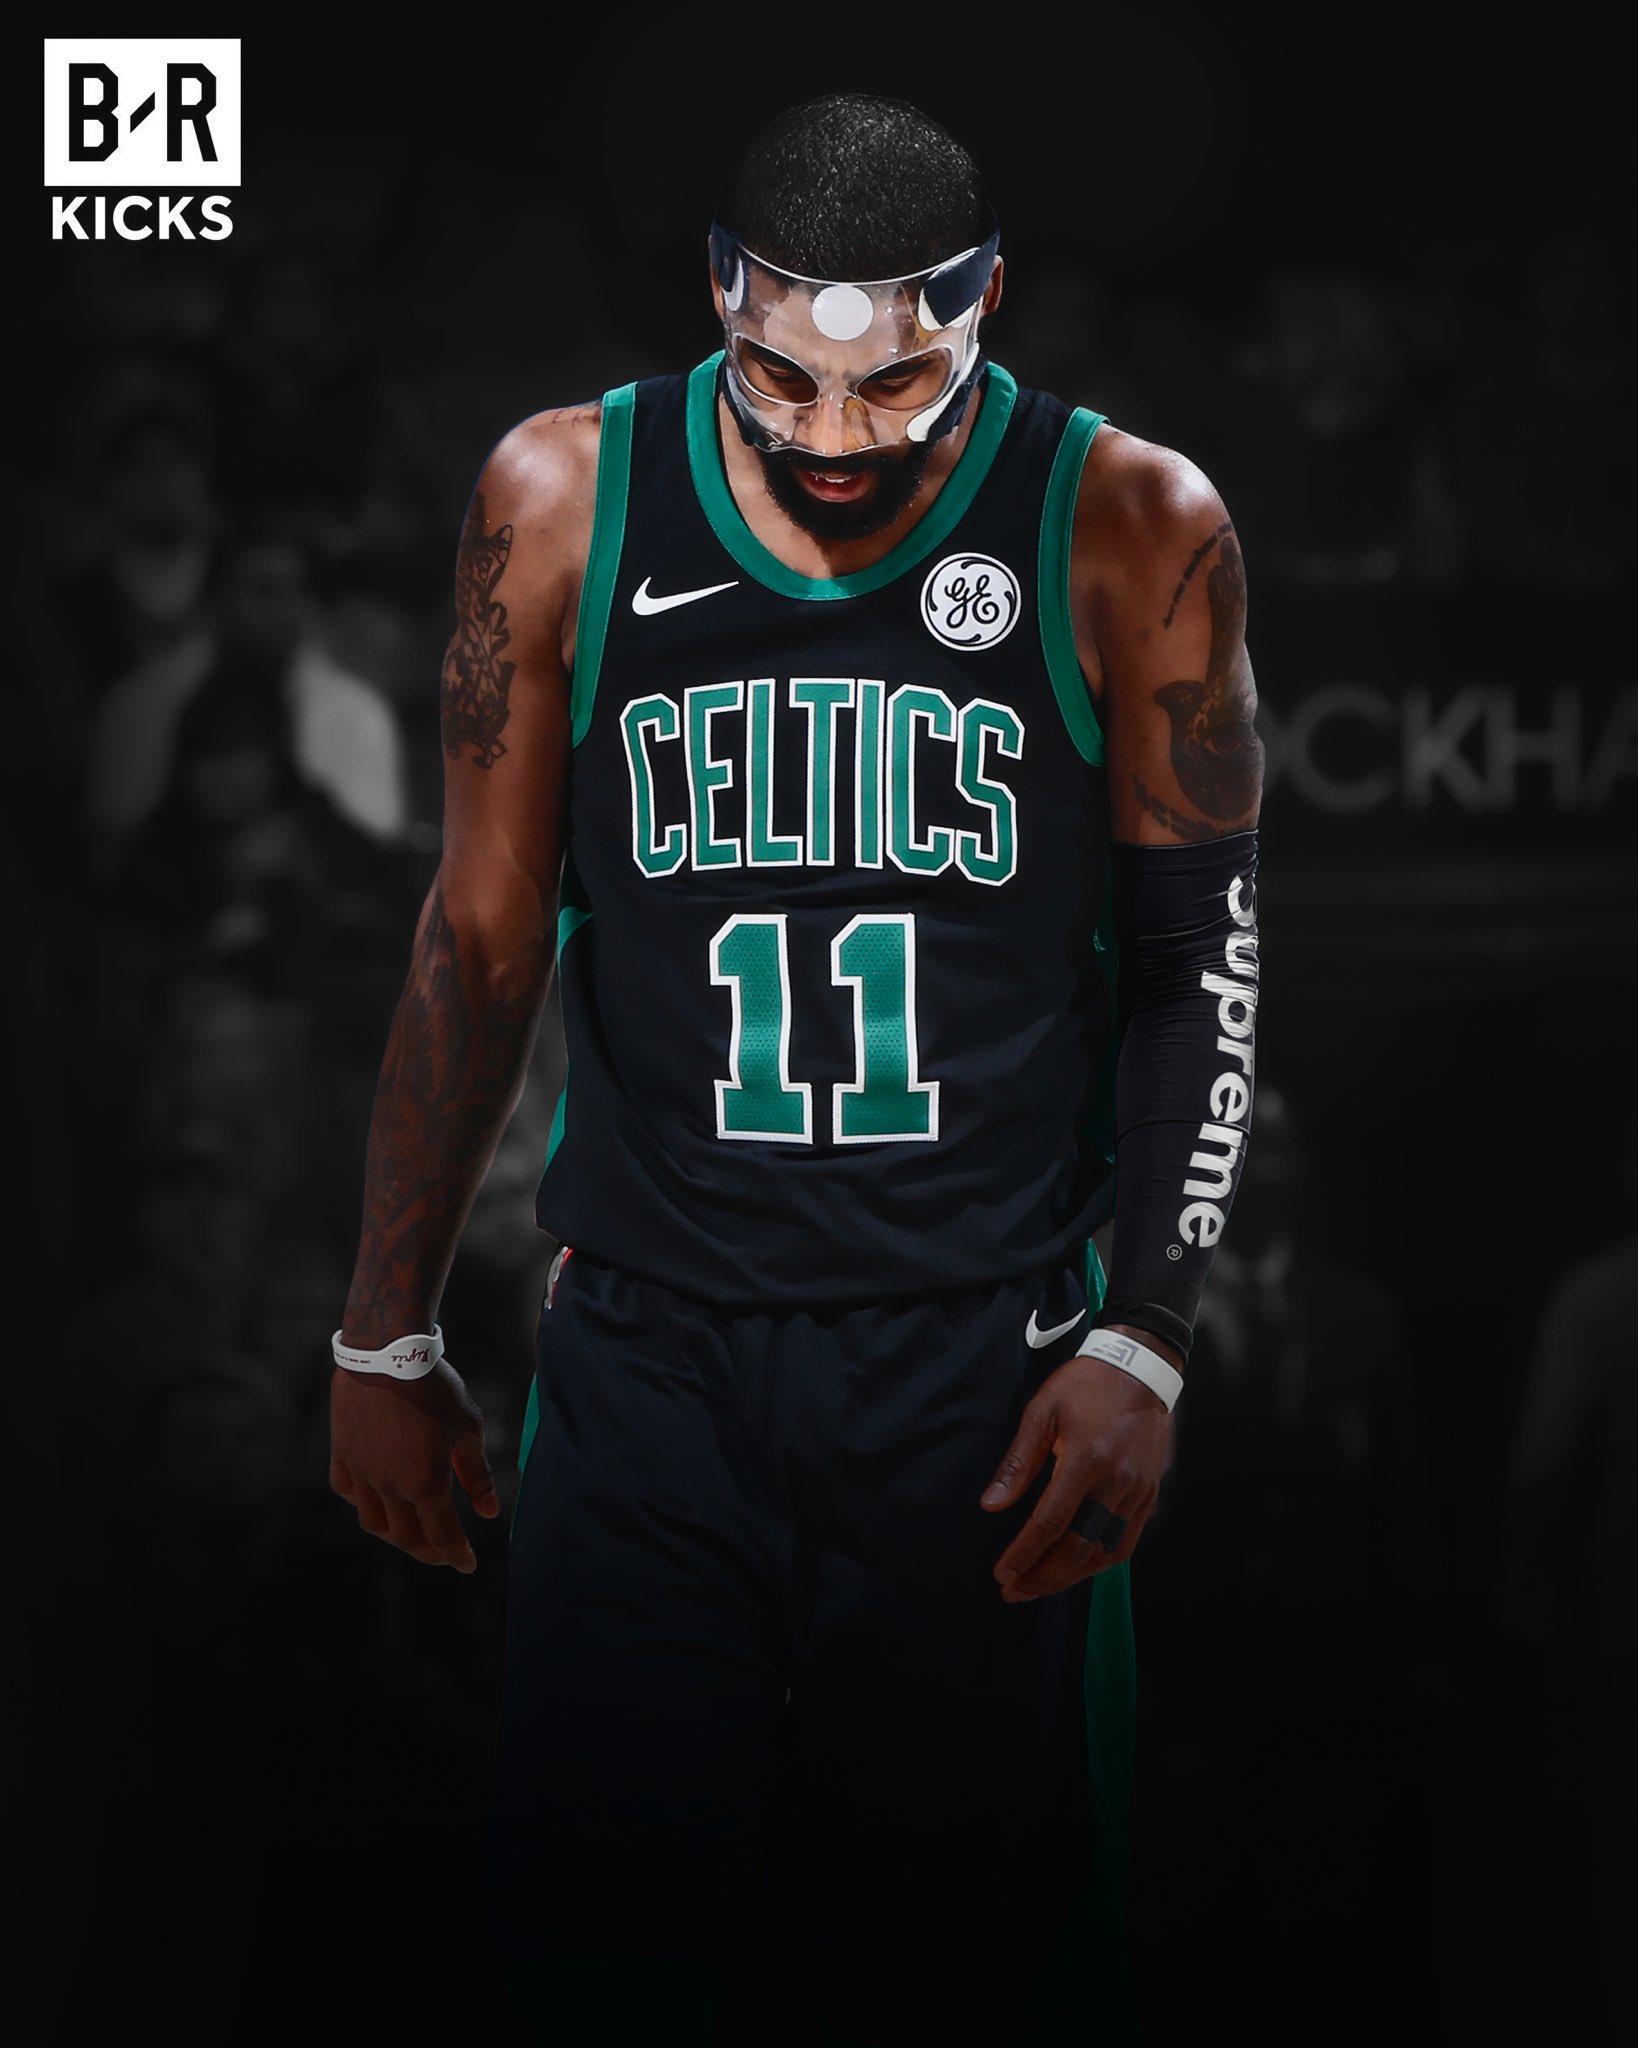 B/R Kicks on X: Imagining more NBA players wearing the Supreme shooting  sleeve  / X